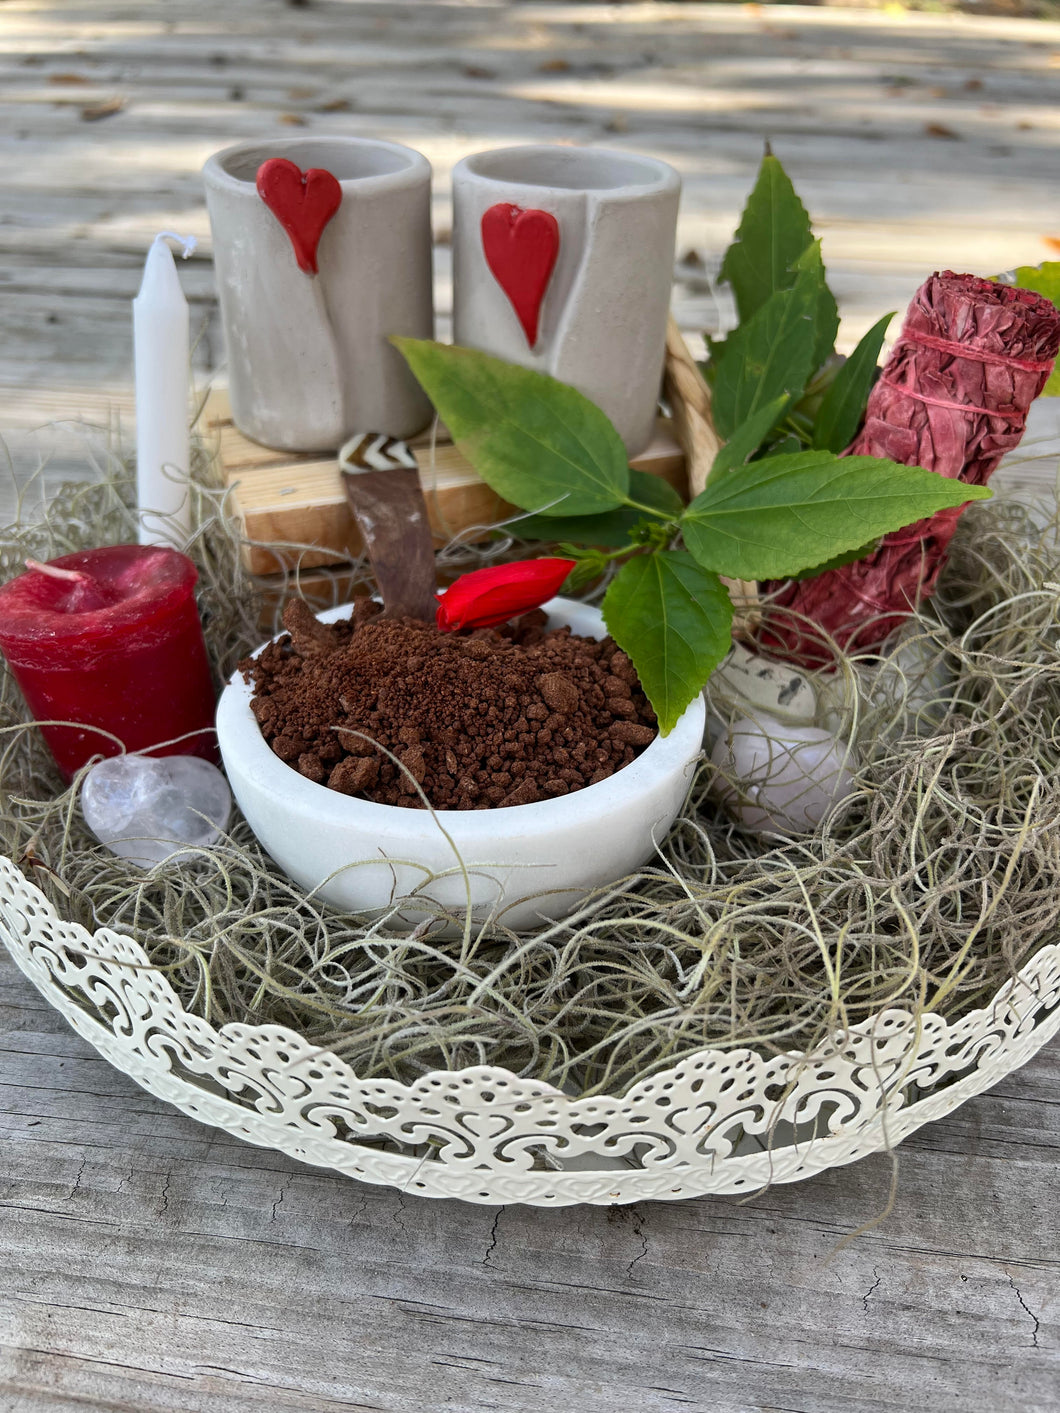 PREORDER: The Abundant Love Valentine's Day Cacao Ceremony Gift Set